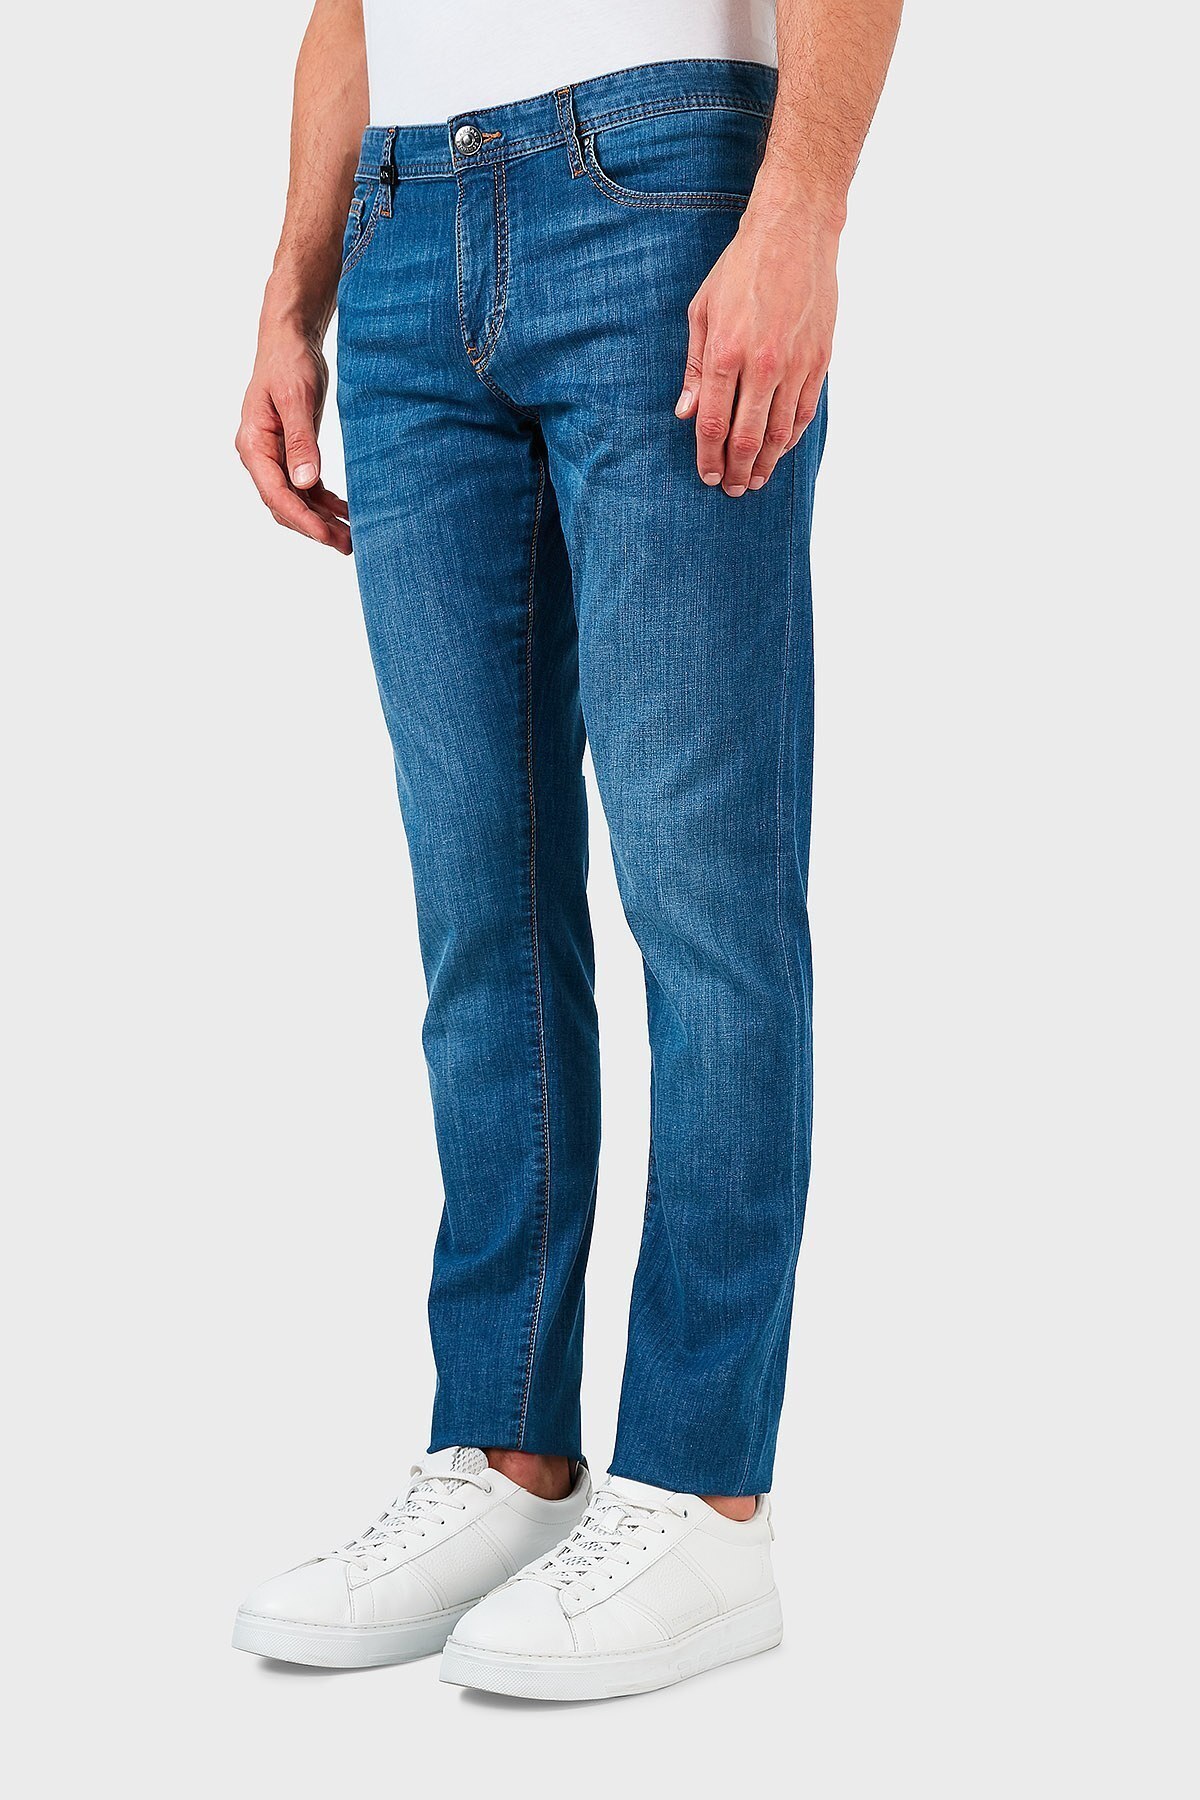 Armani Exchange Pamuklu Skinny Fit J14 Jeans Erkek Kot Pantolon 3KZJ14 Z1FQZ 1500 LACİVERT